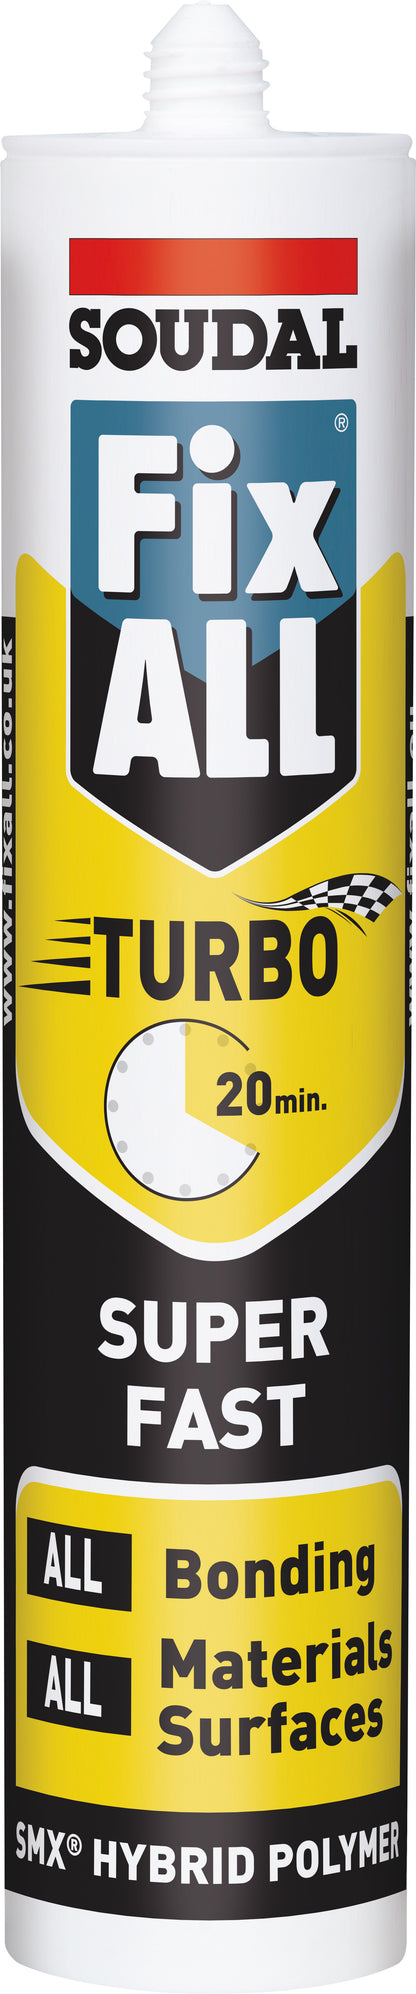 Soudal Black Fix All Turbo Silicone Sealant & Adhesive